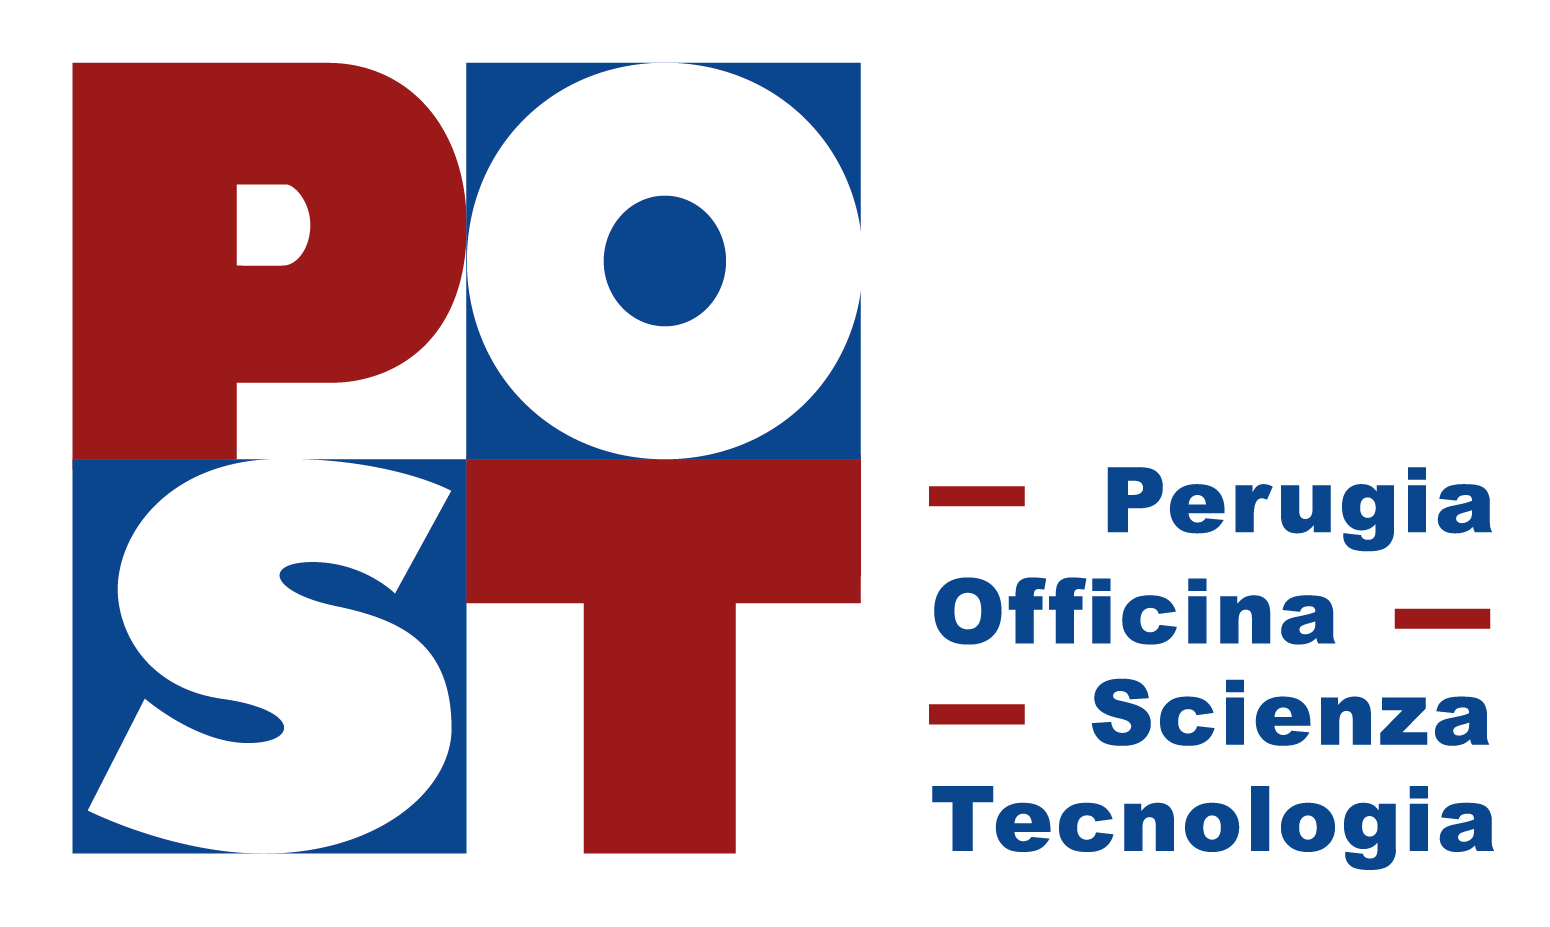 logo Post